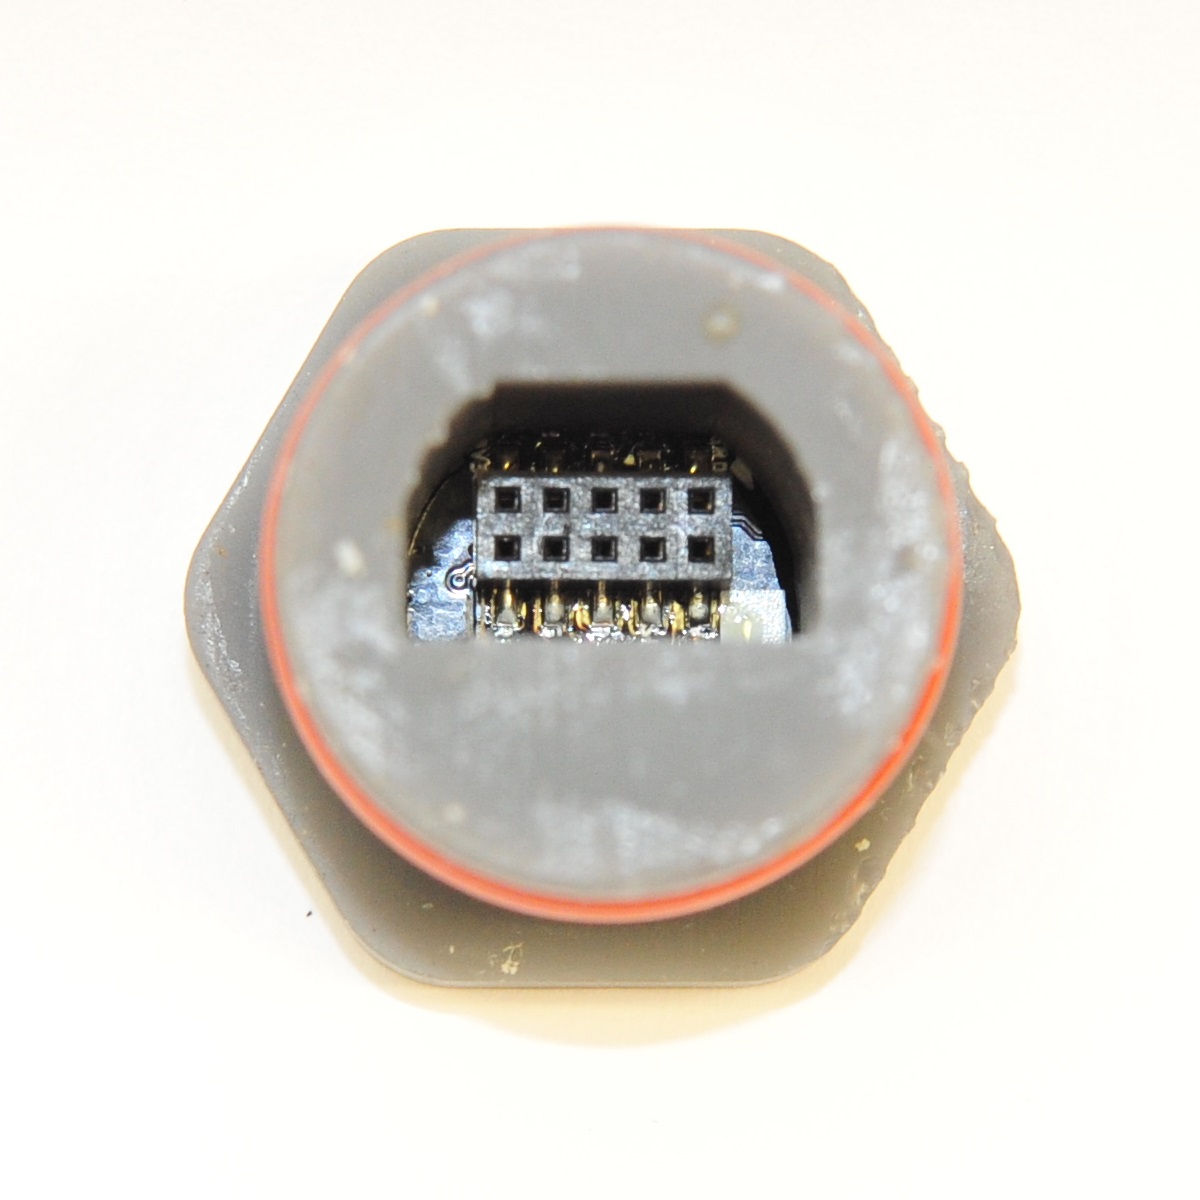 Sensor frontend connector